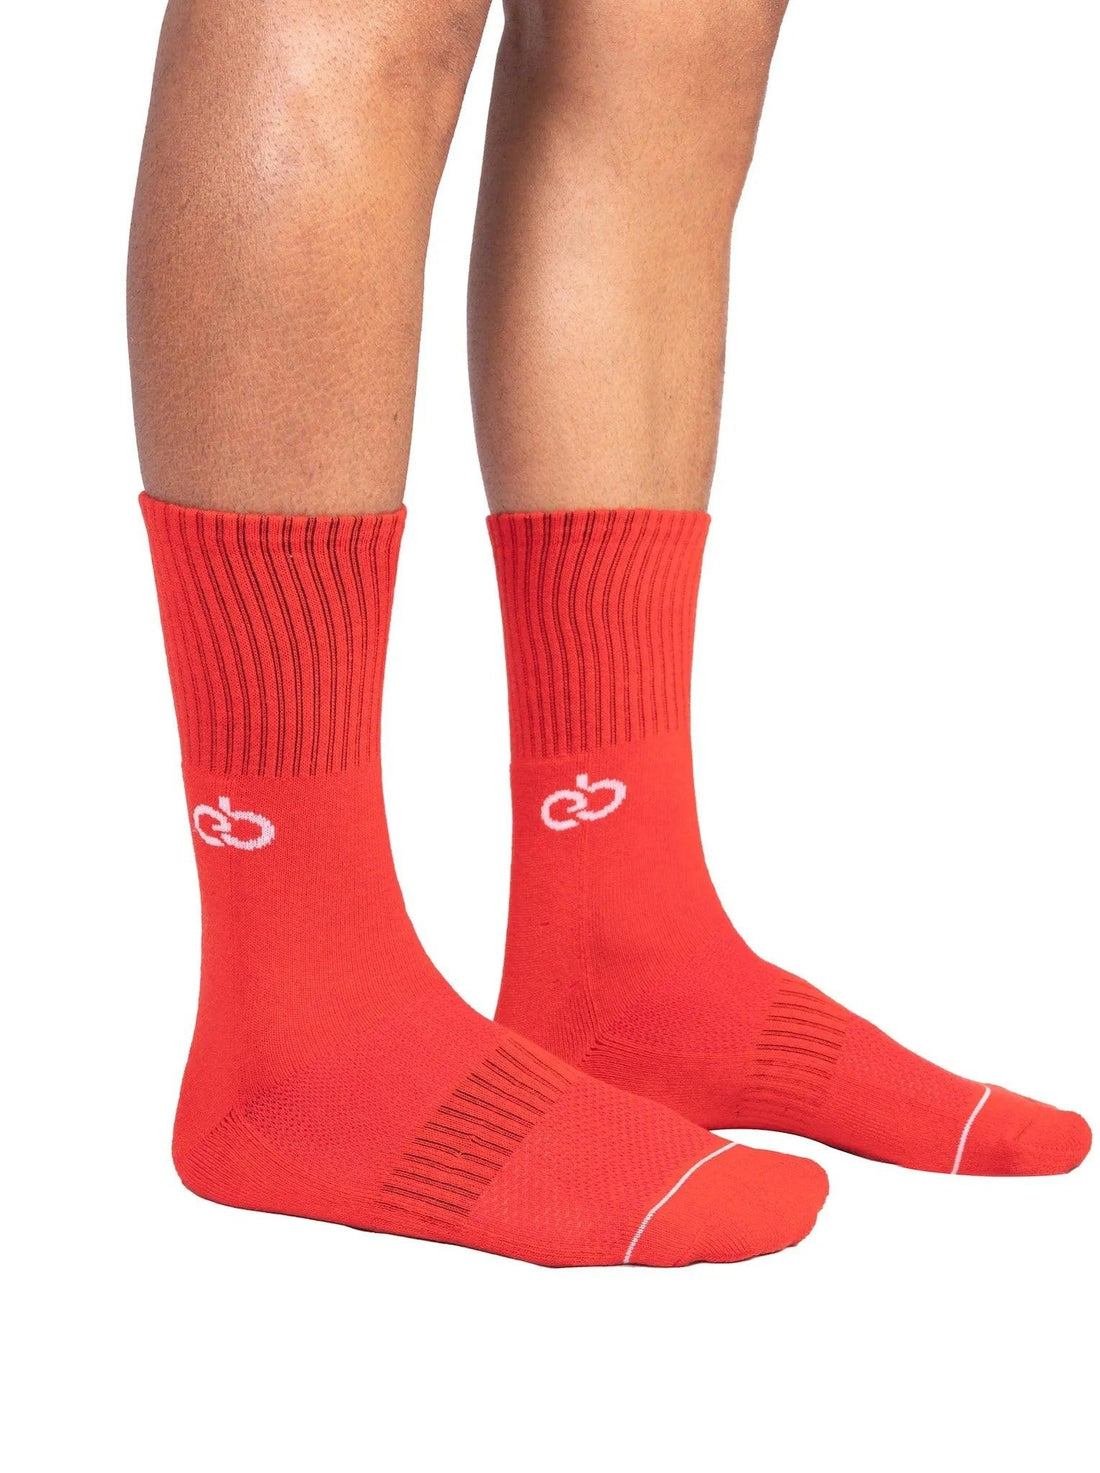 Socks - Crimson Royale Crew Socks - Red - Erobold - 